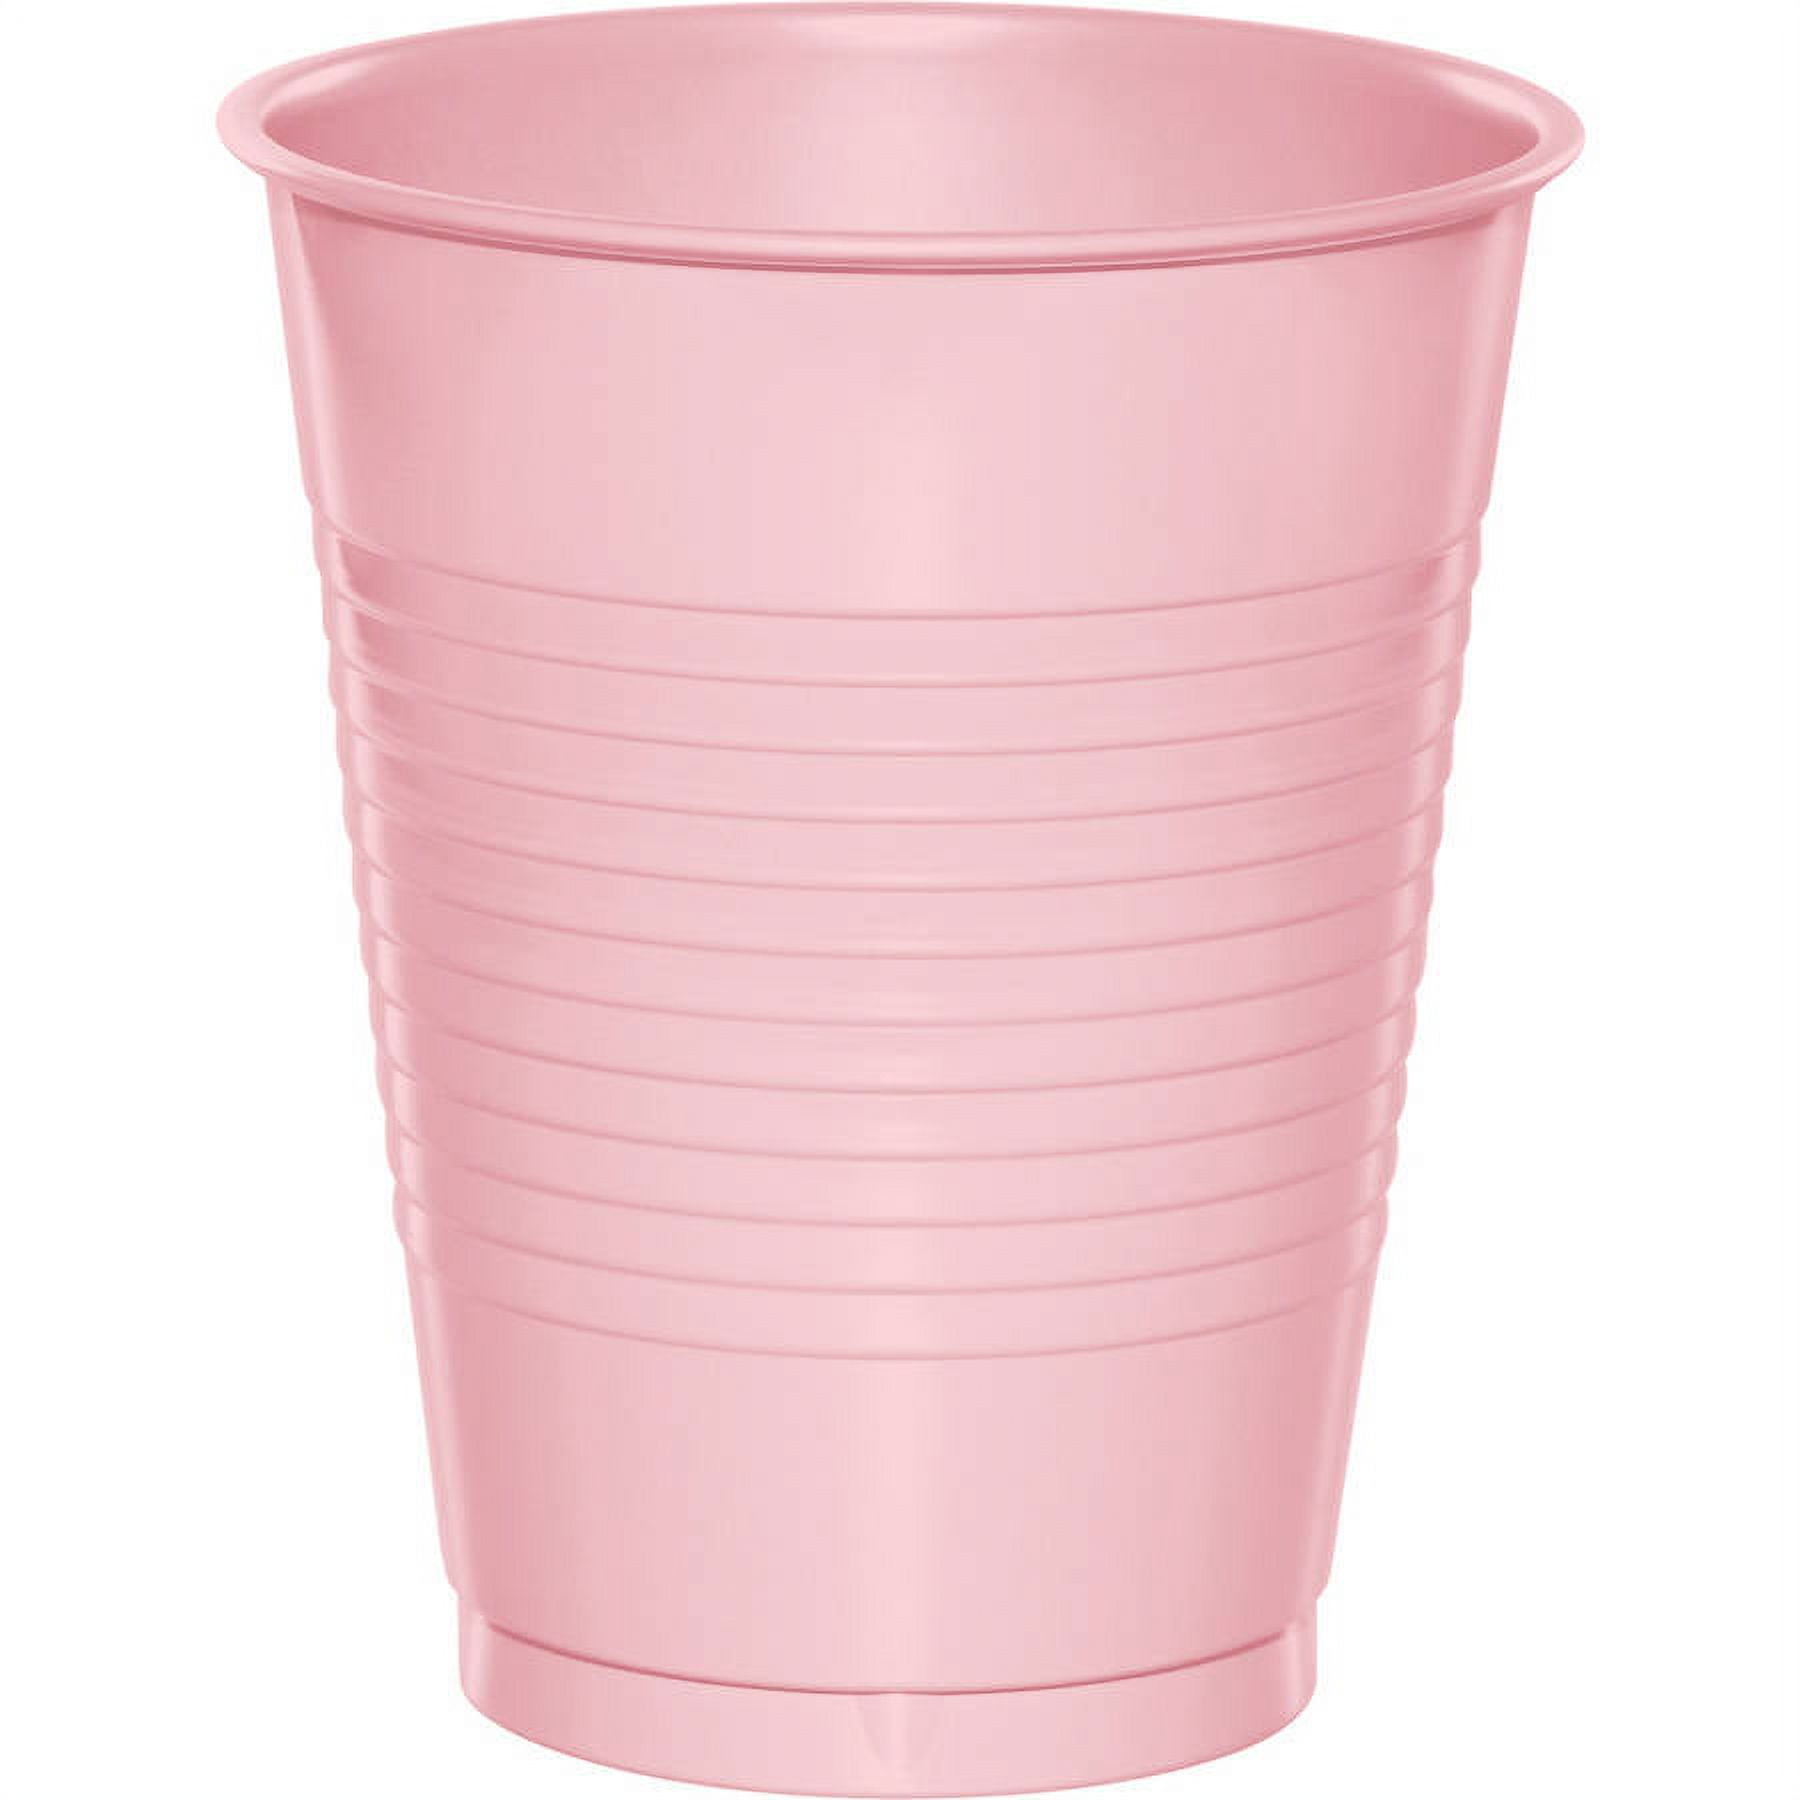 Cup 20. Пластиковый стакан. Стаканчик пластиковый. Розовый стаканчик. Полиэтиленовый стакан.